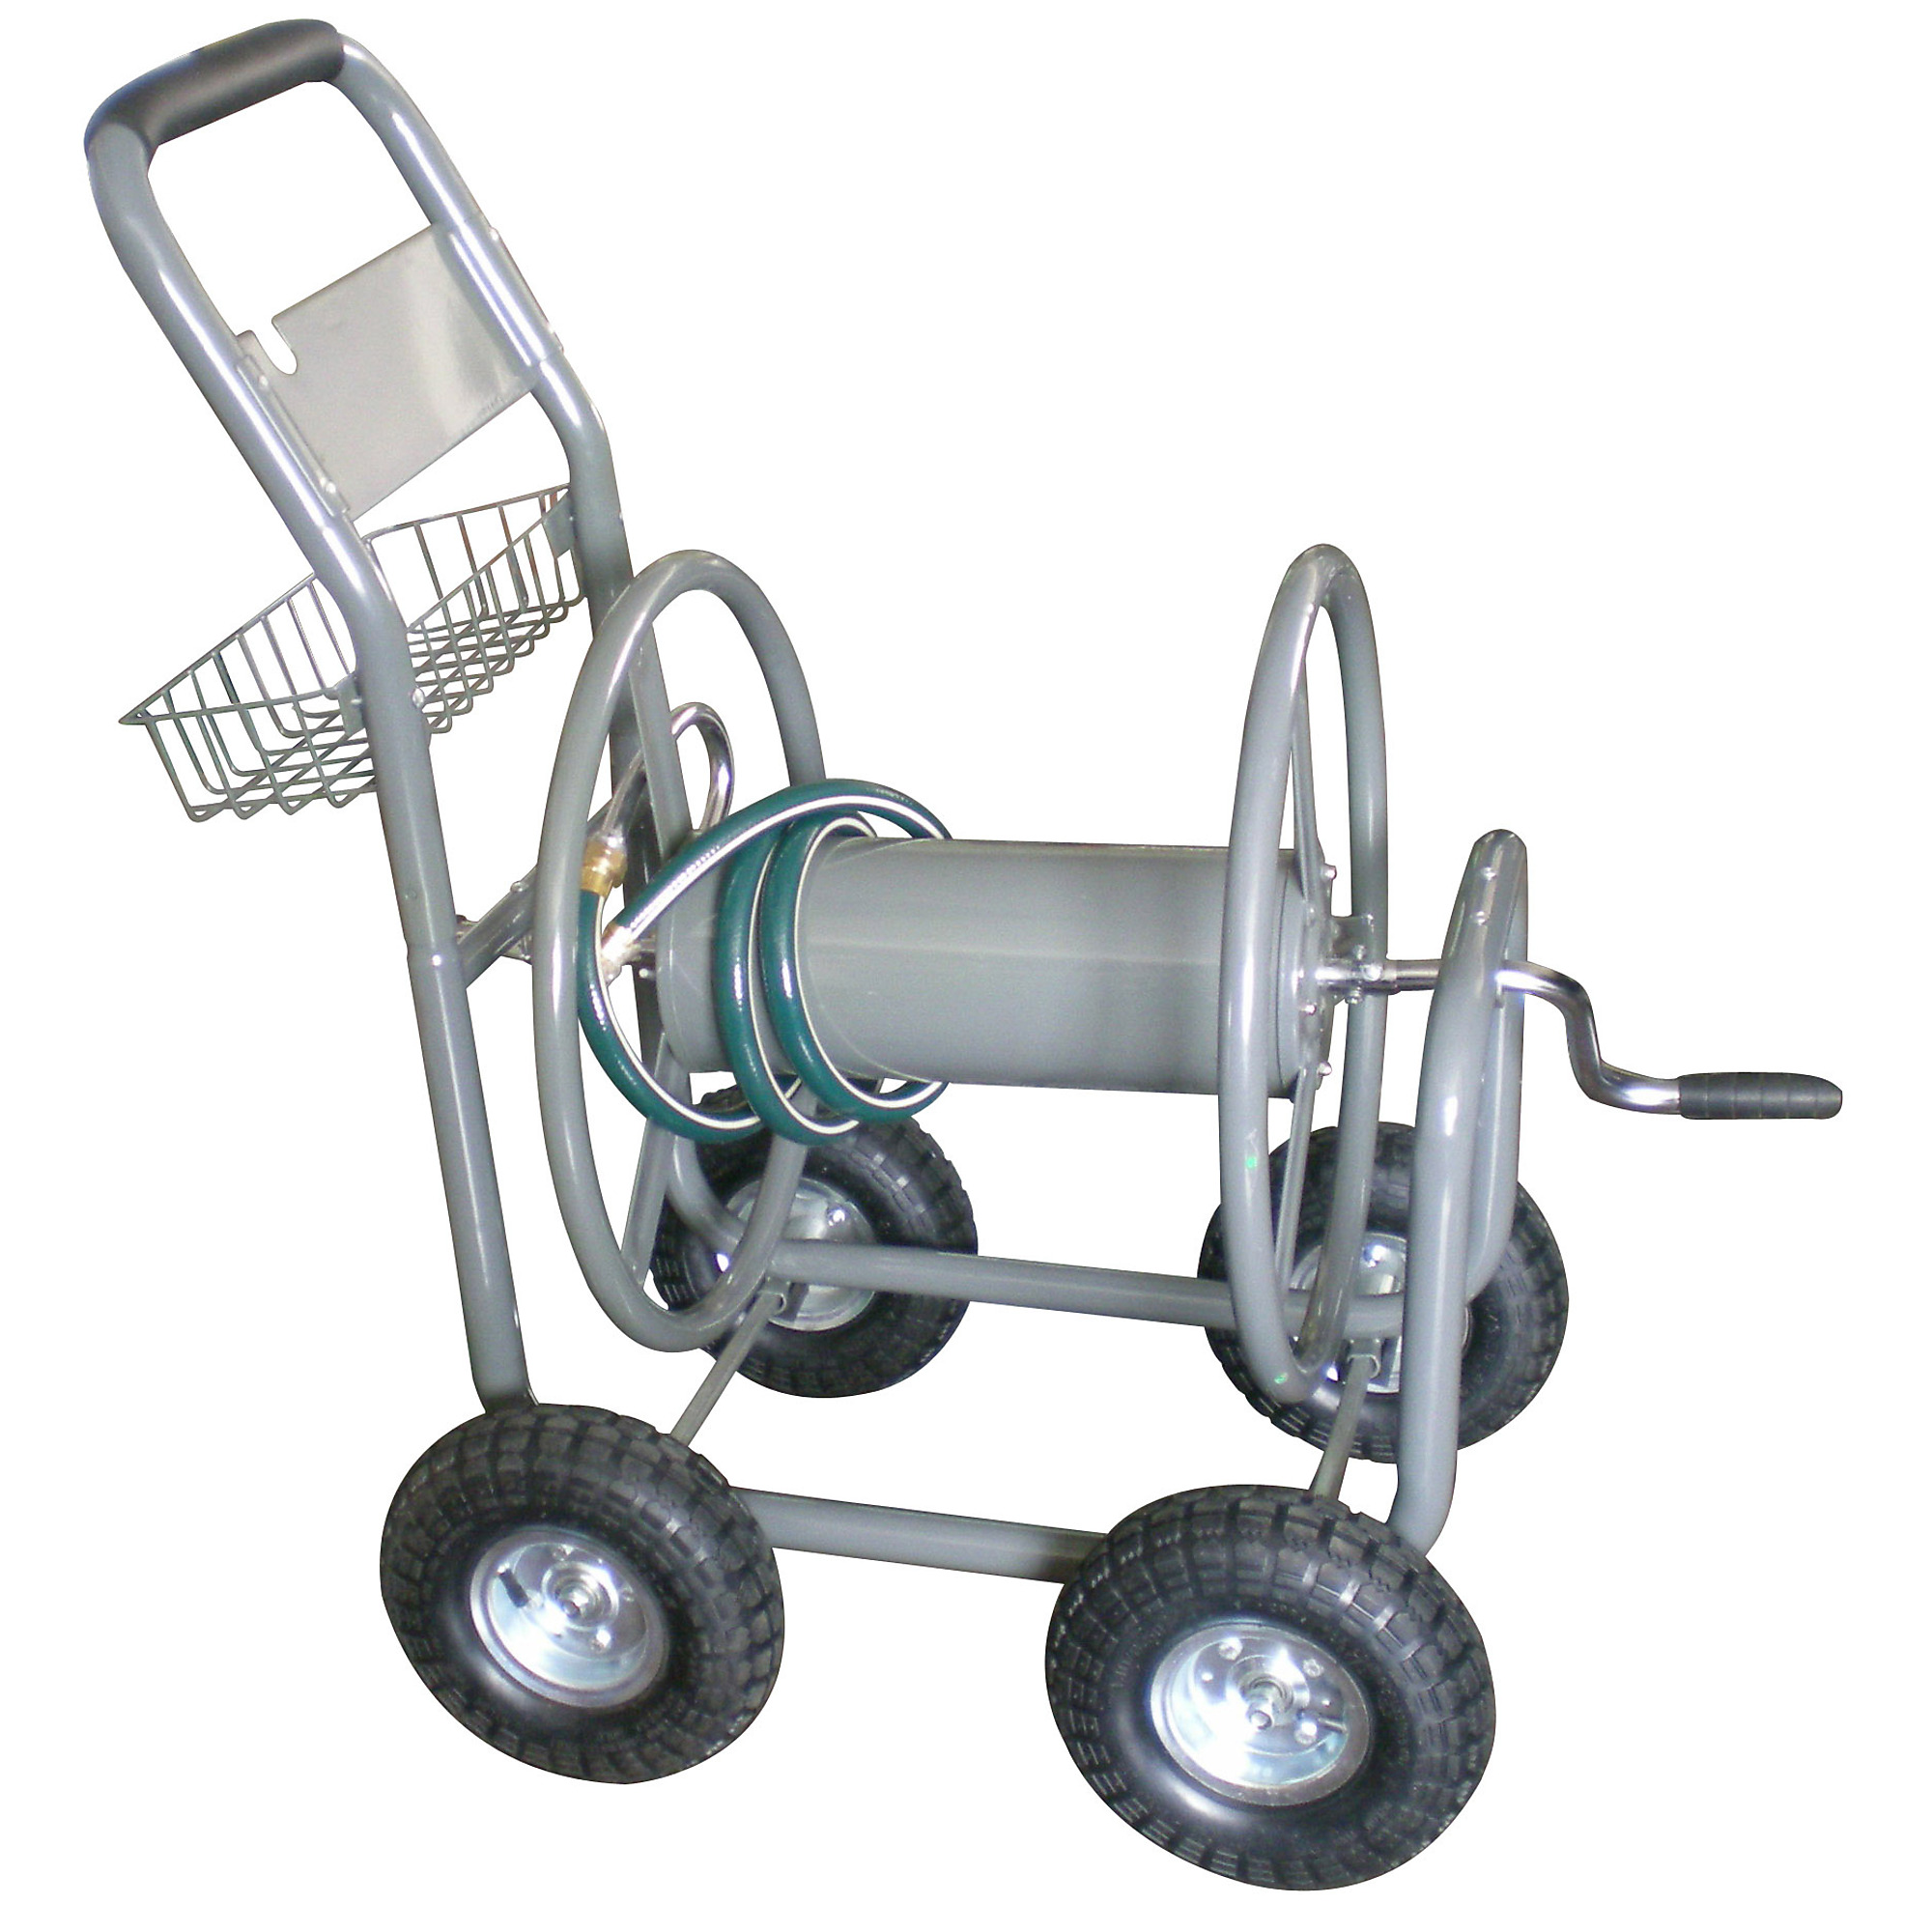 Yard Tuff, Hose Reel Cart, Hose Length Capacity 300 ft, Color Gray